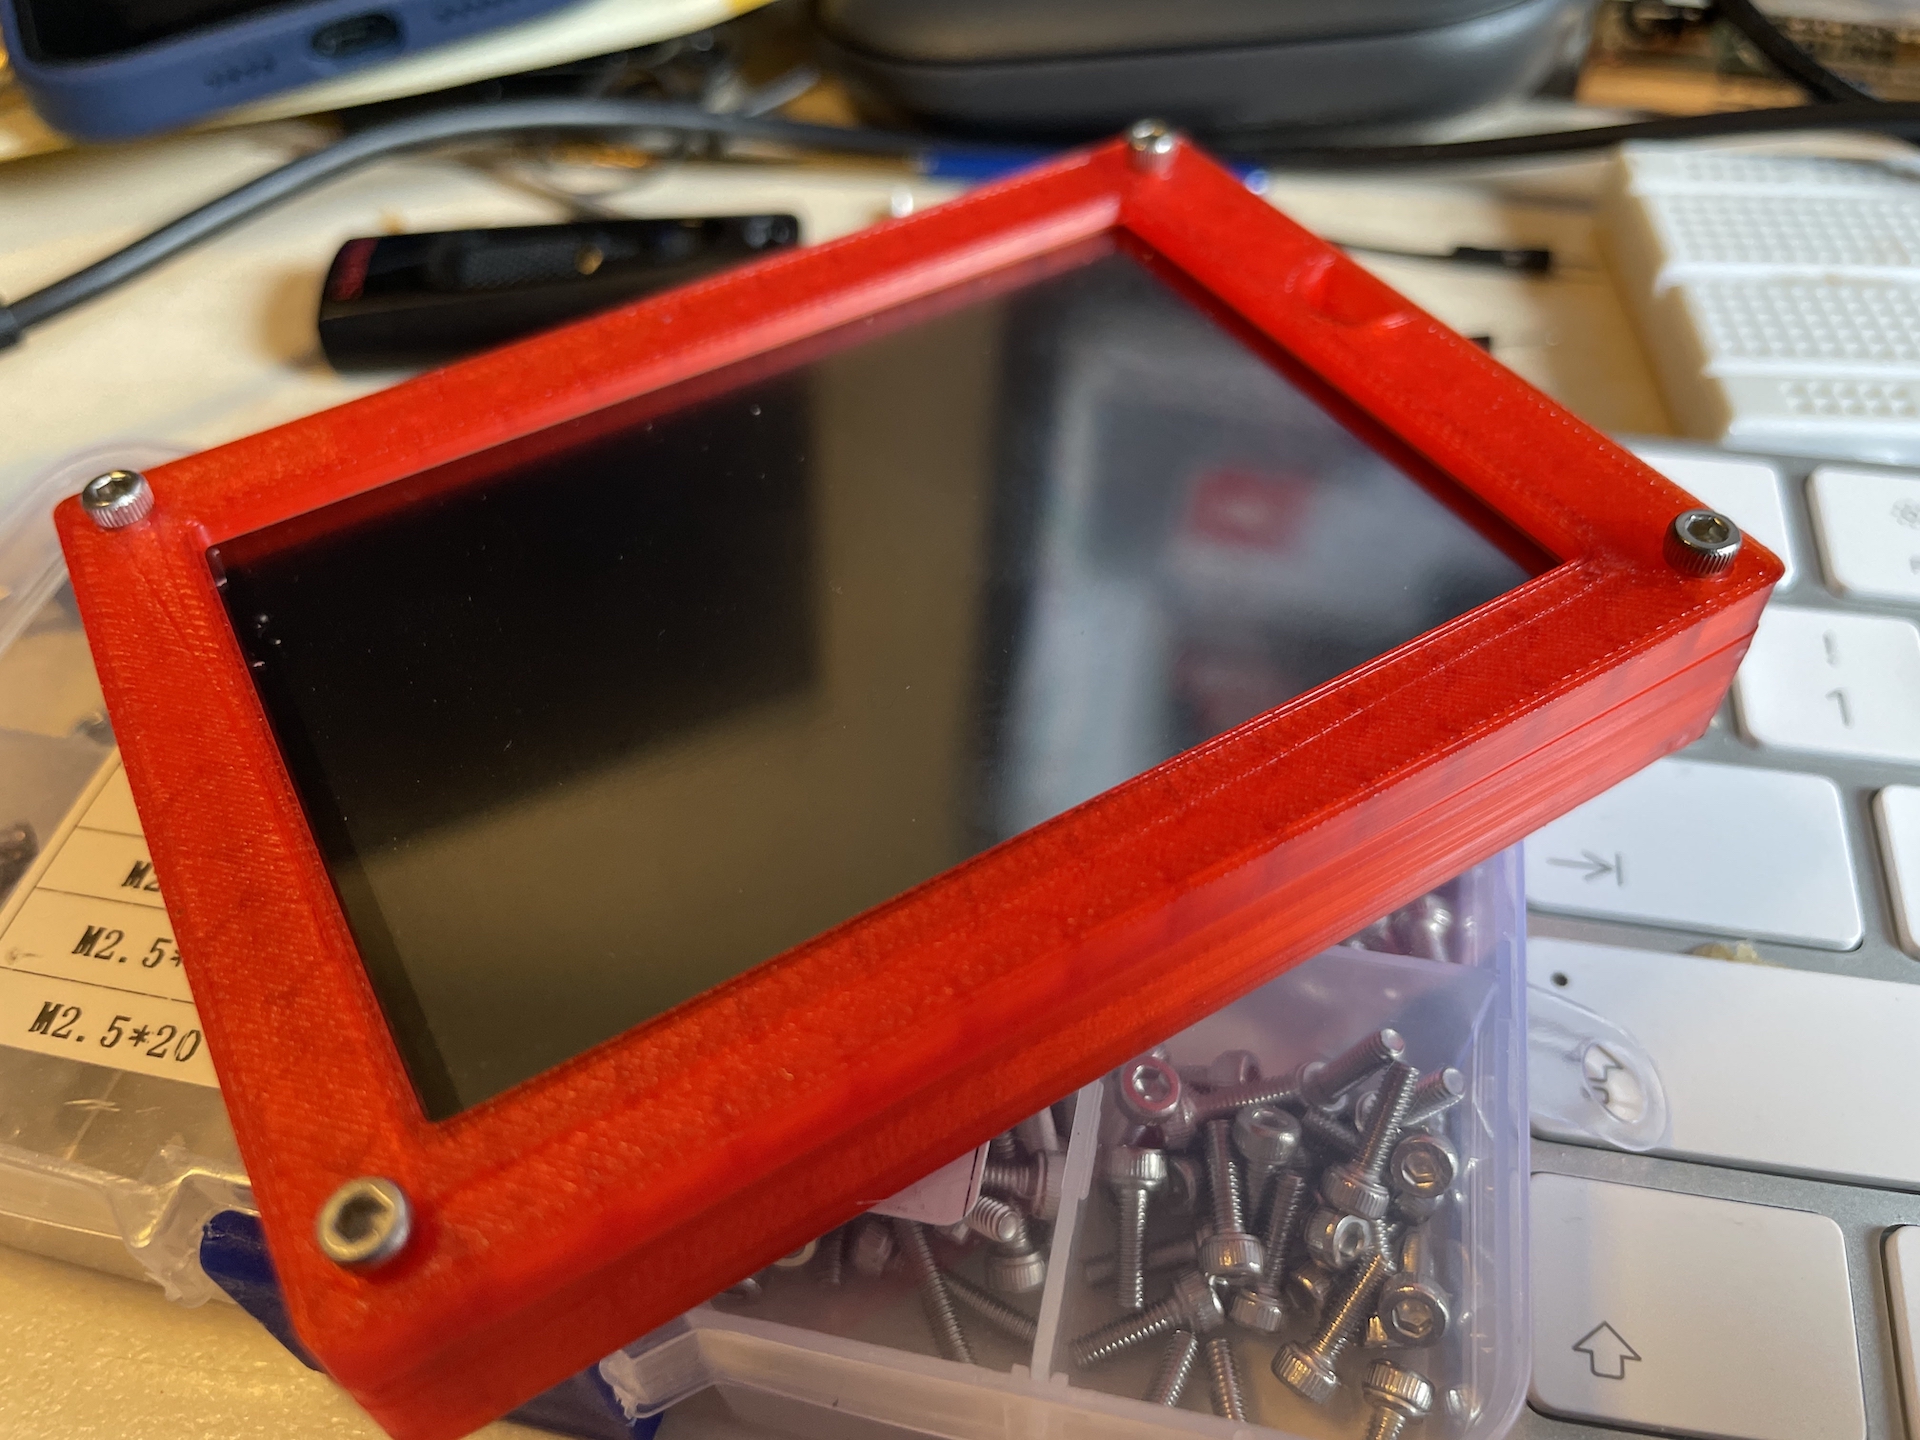 A PyPortal Titano, with 3D printed case